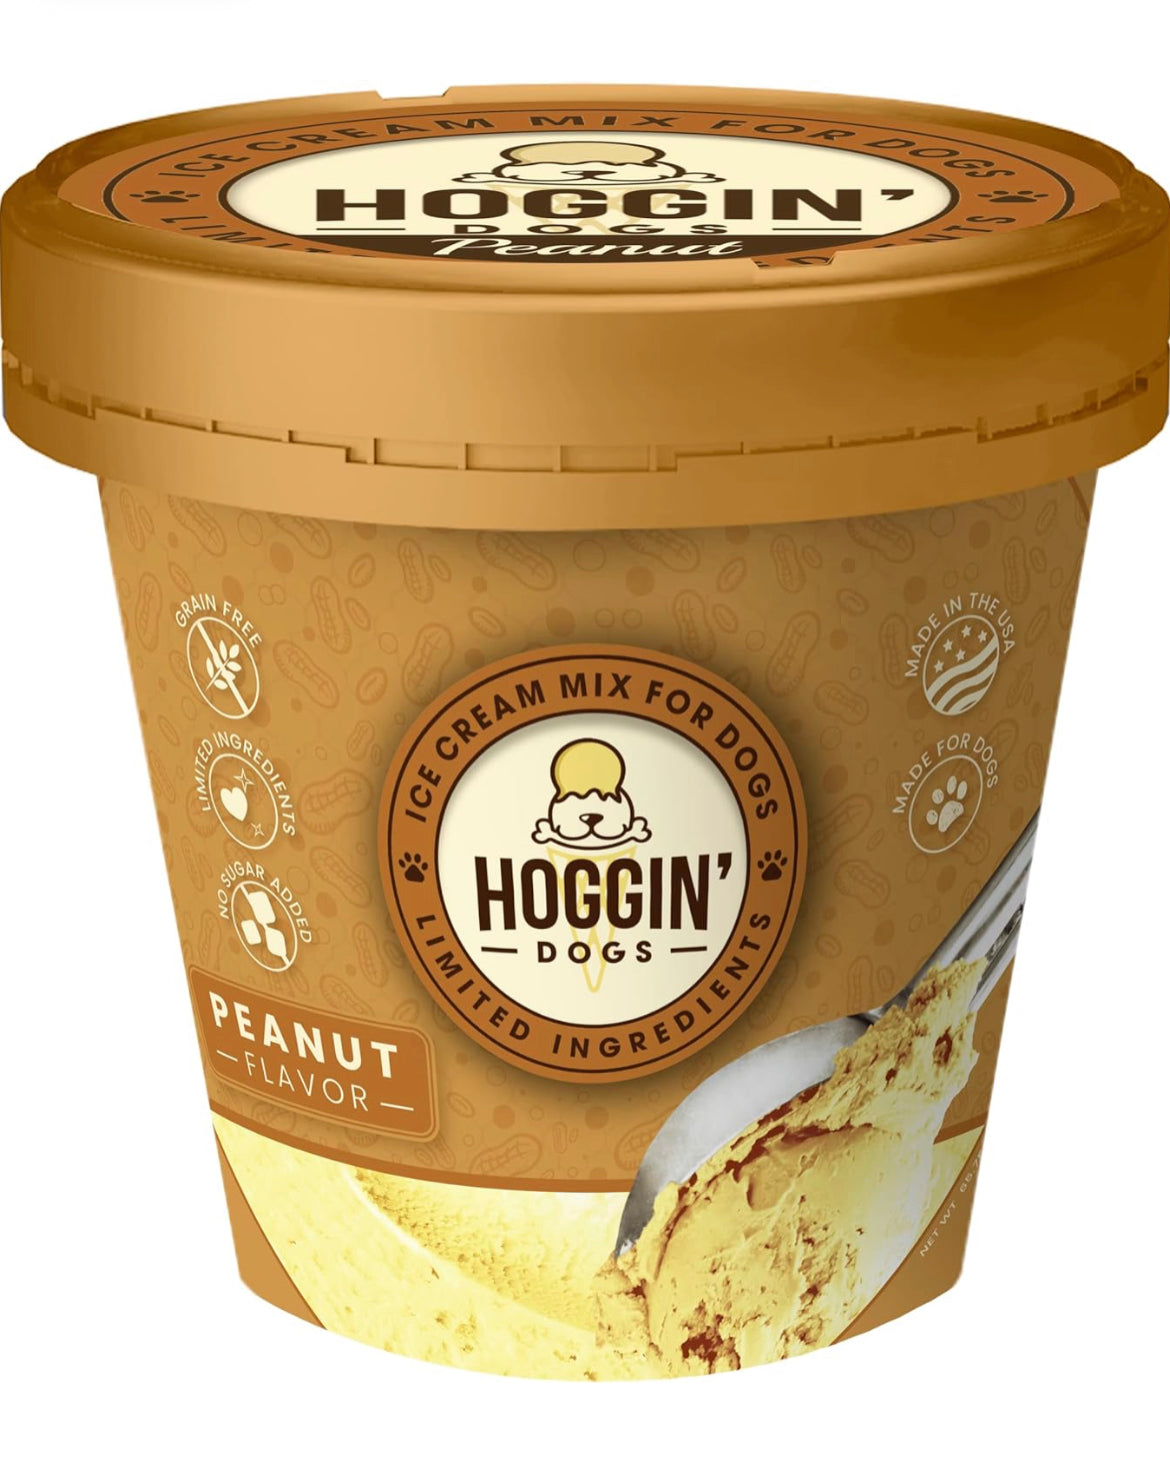 Hoggin Dogs Ice Cream